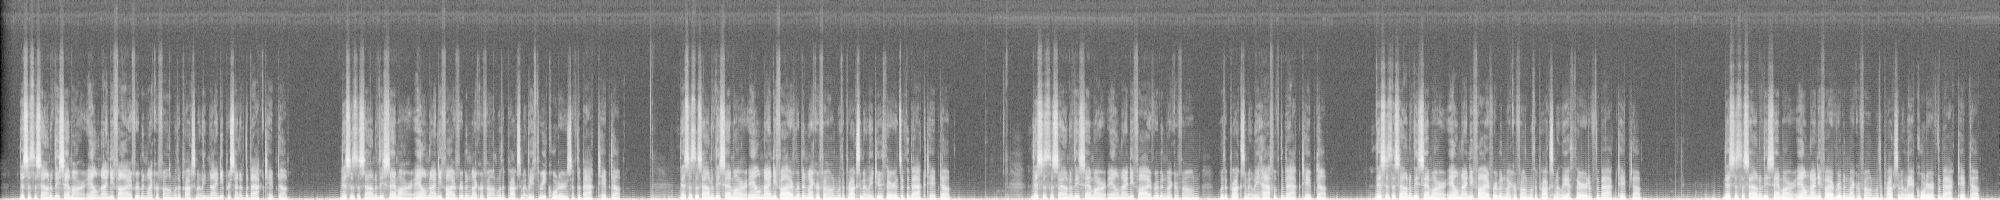 Spectrogram representation of audio